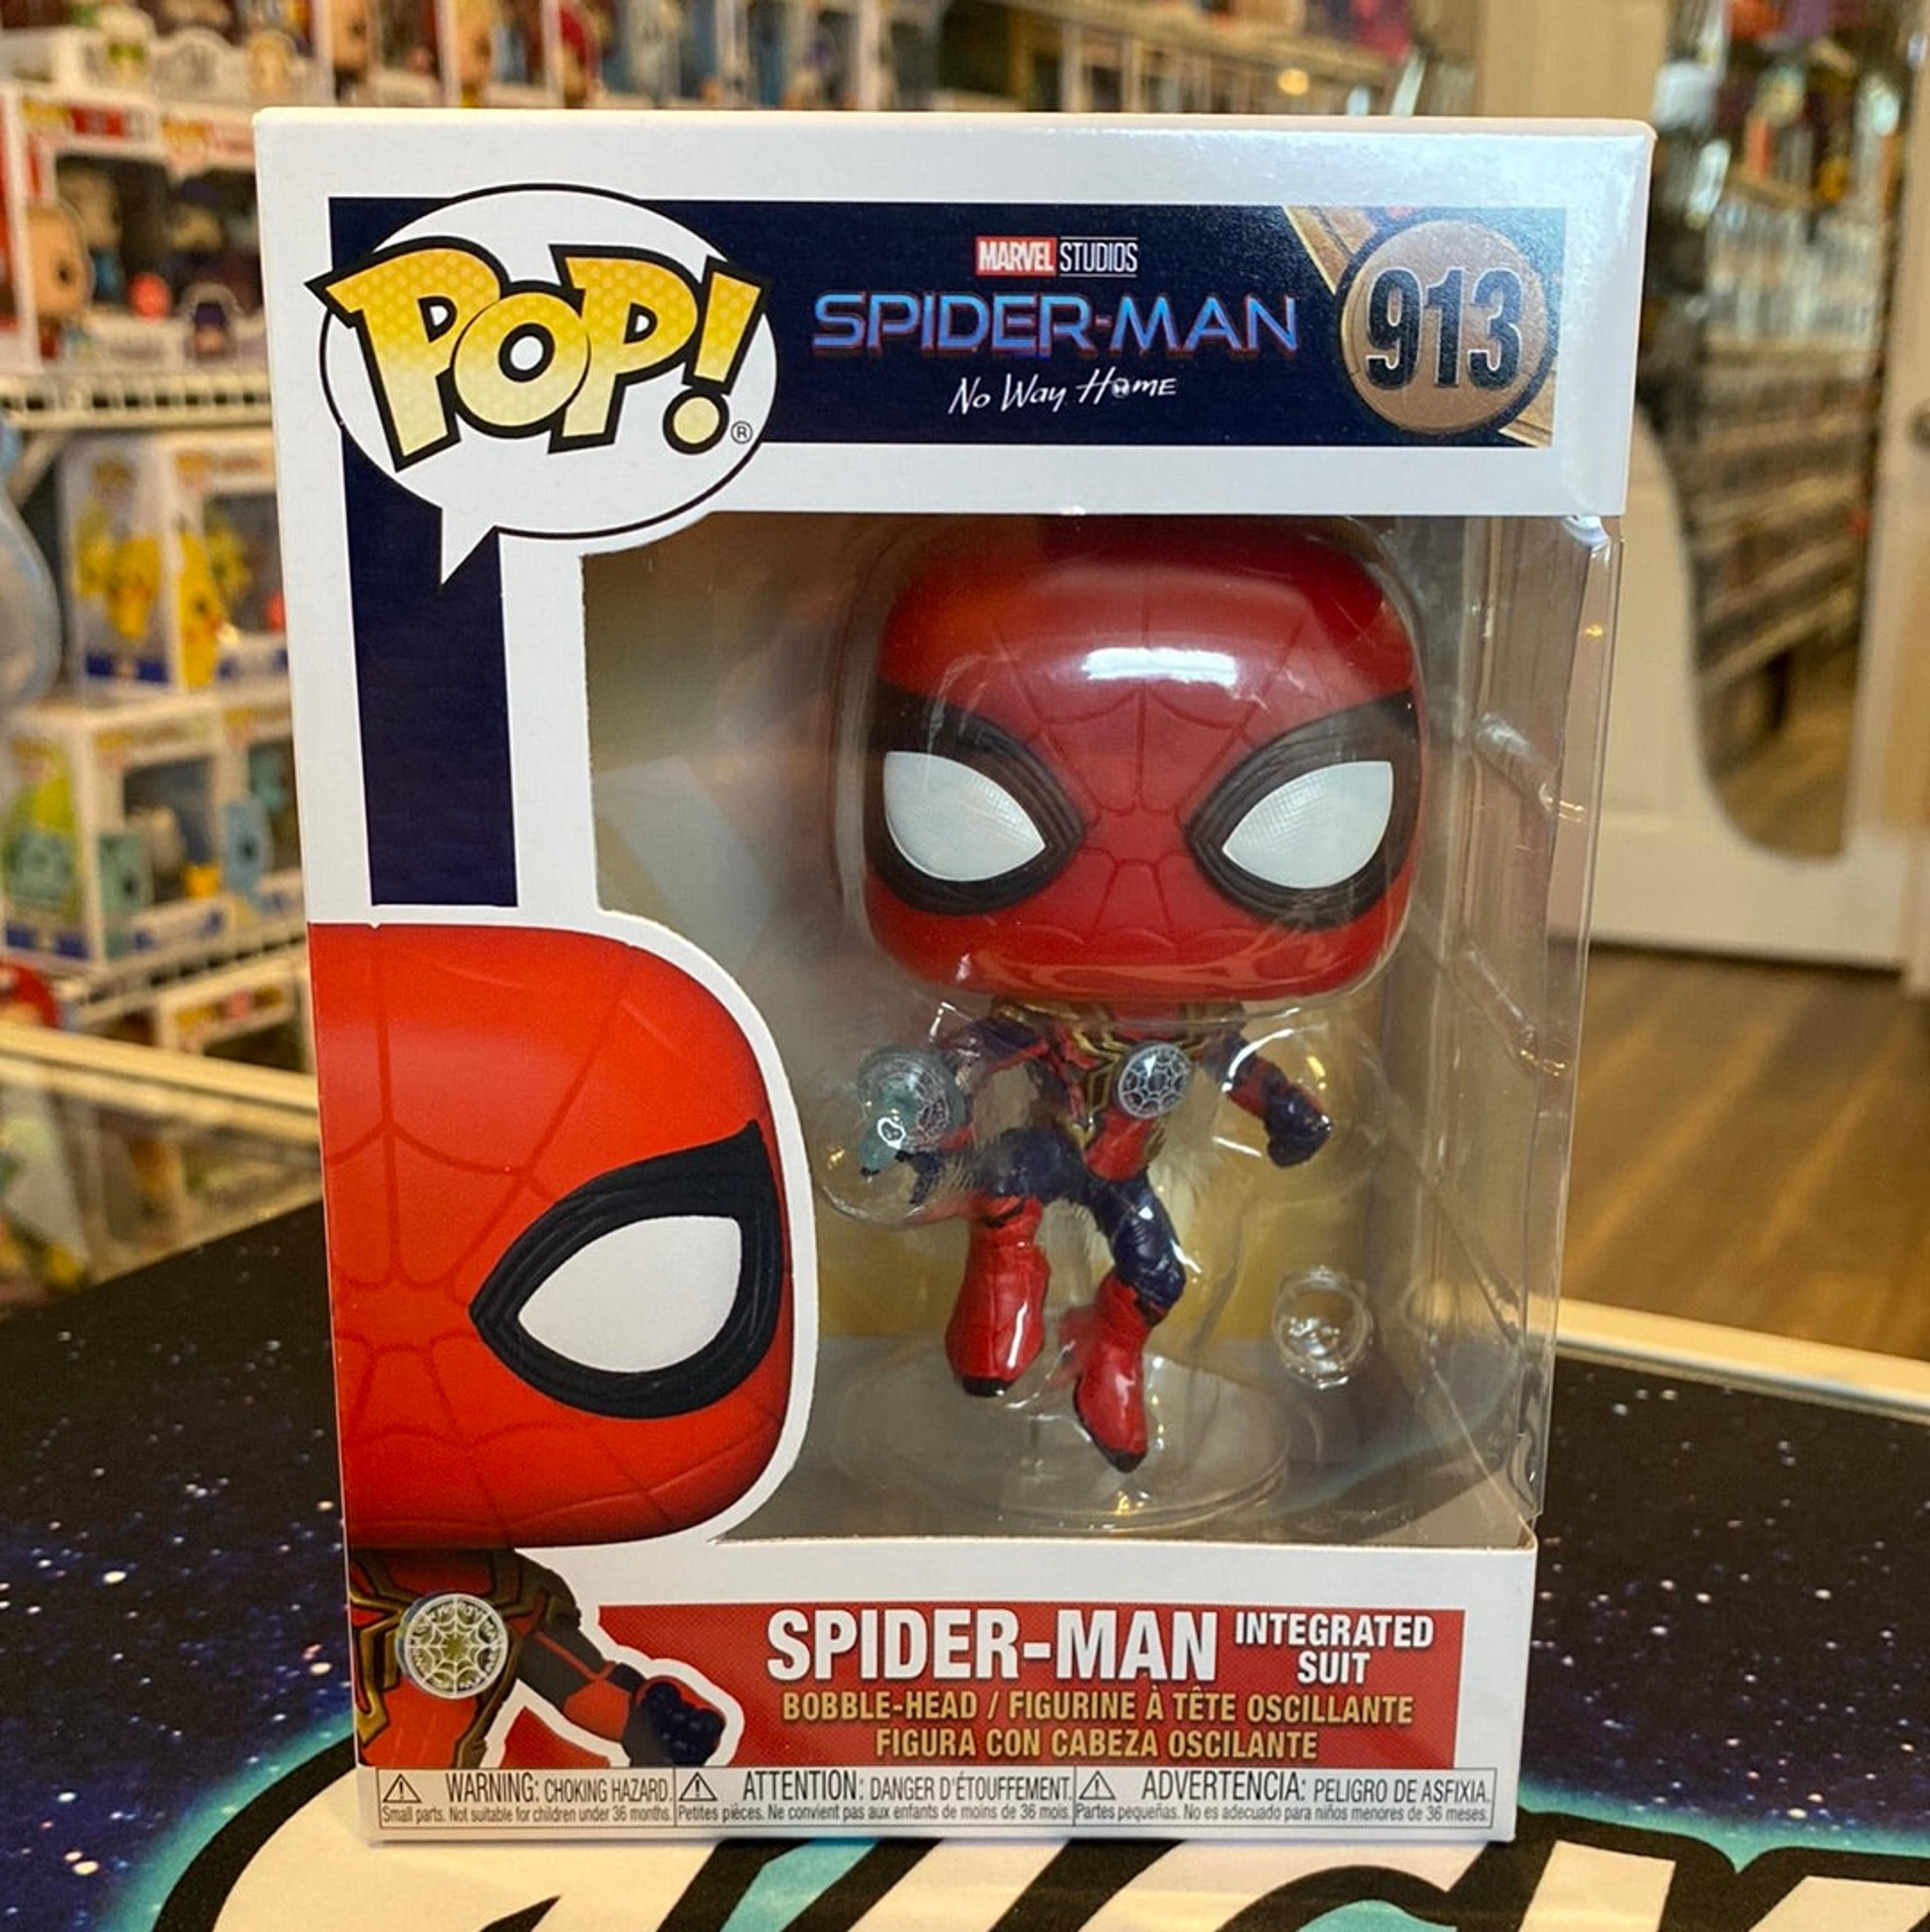 Spider-Man Integrated Suit Funko Pop 913